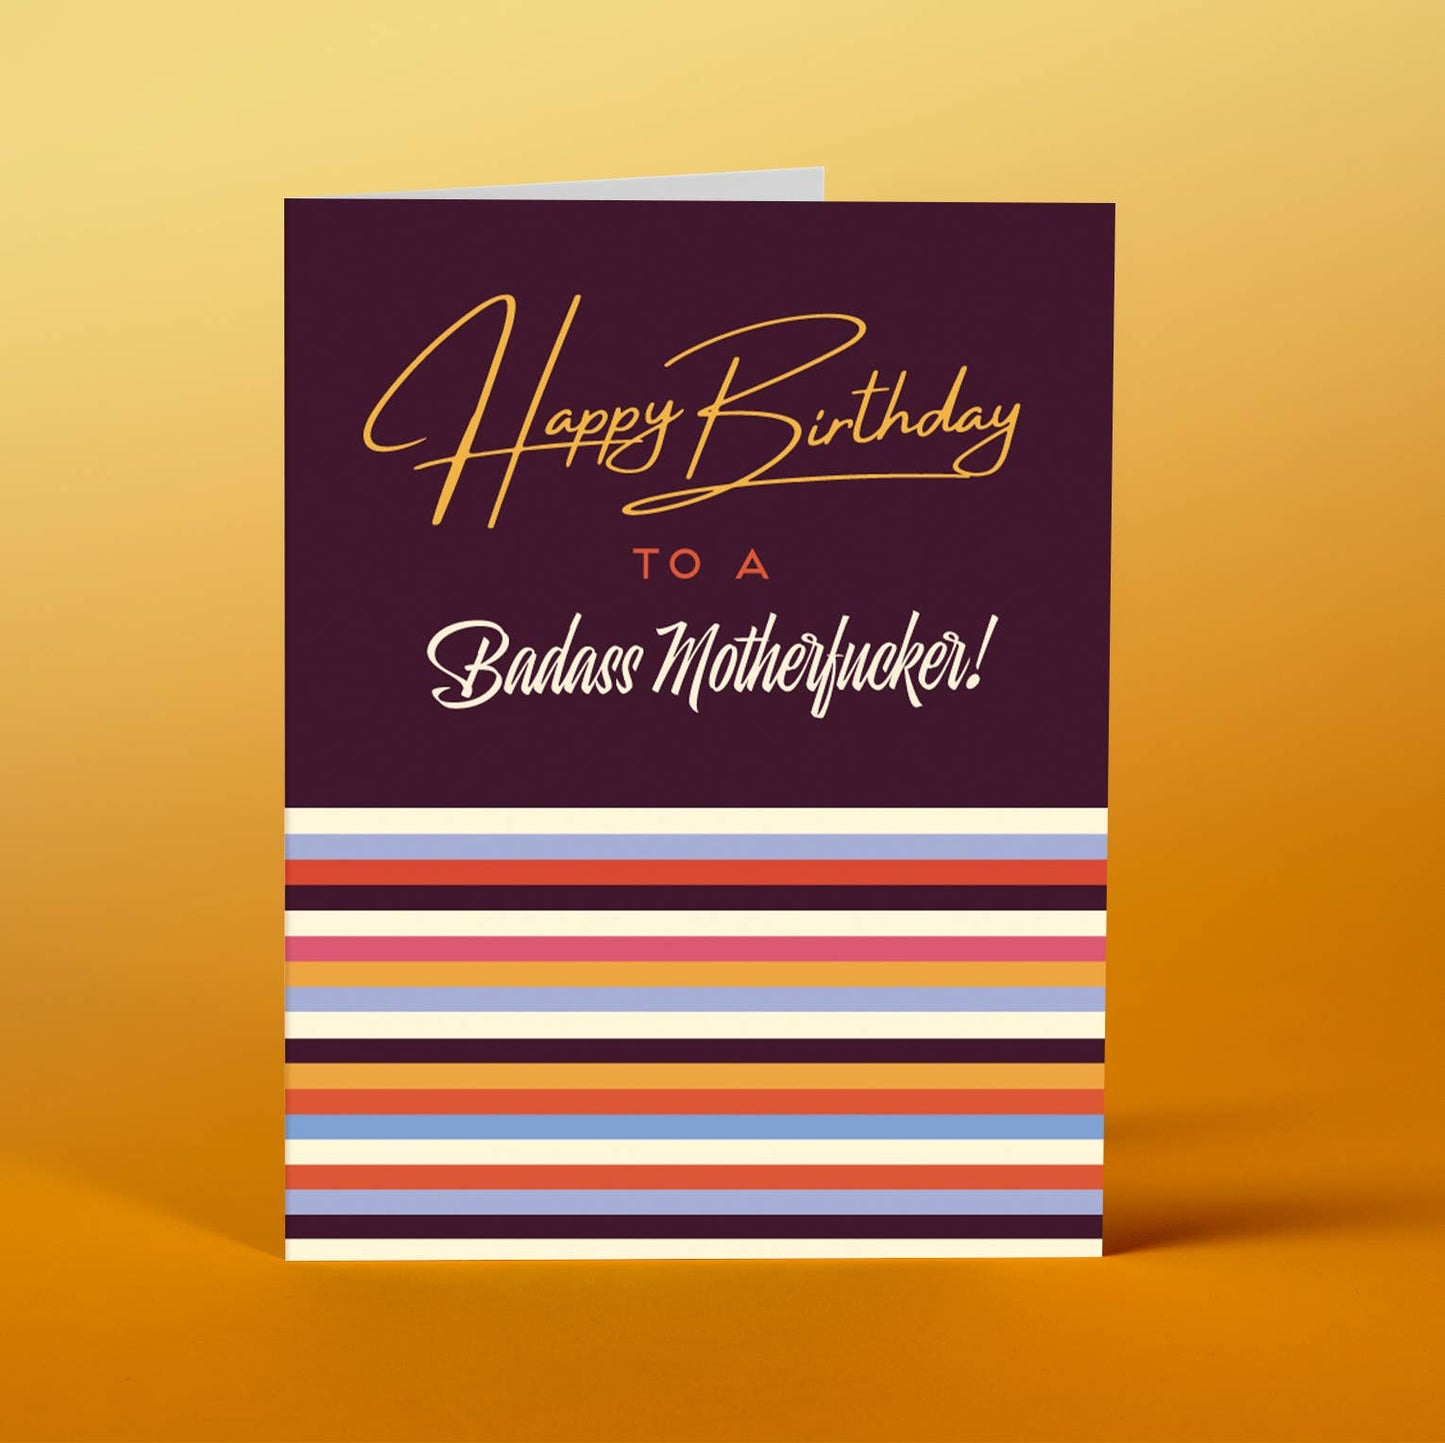 Badass Motherfucker Birthday Card